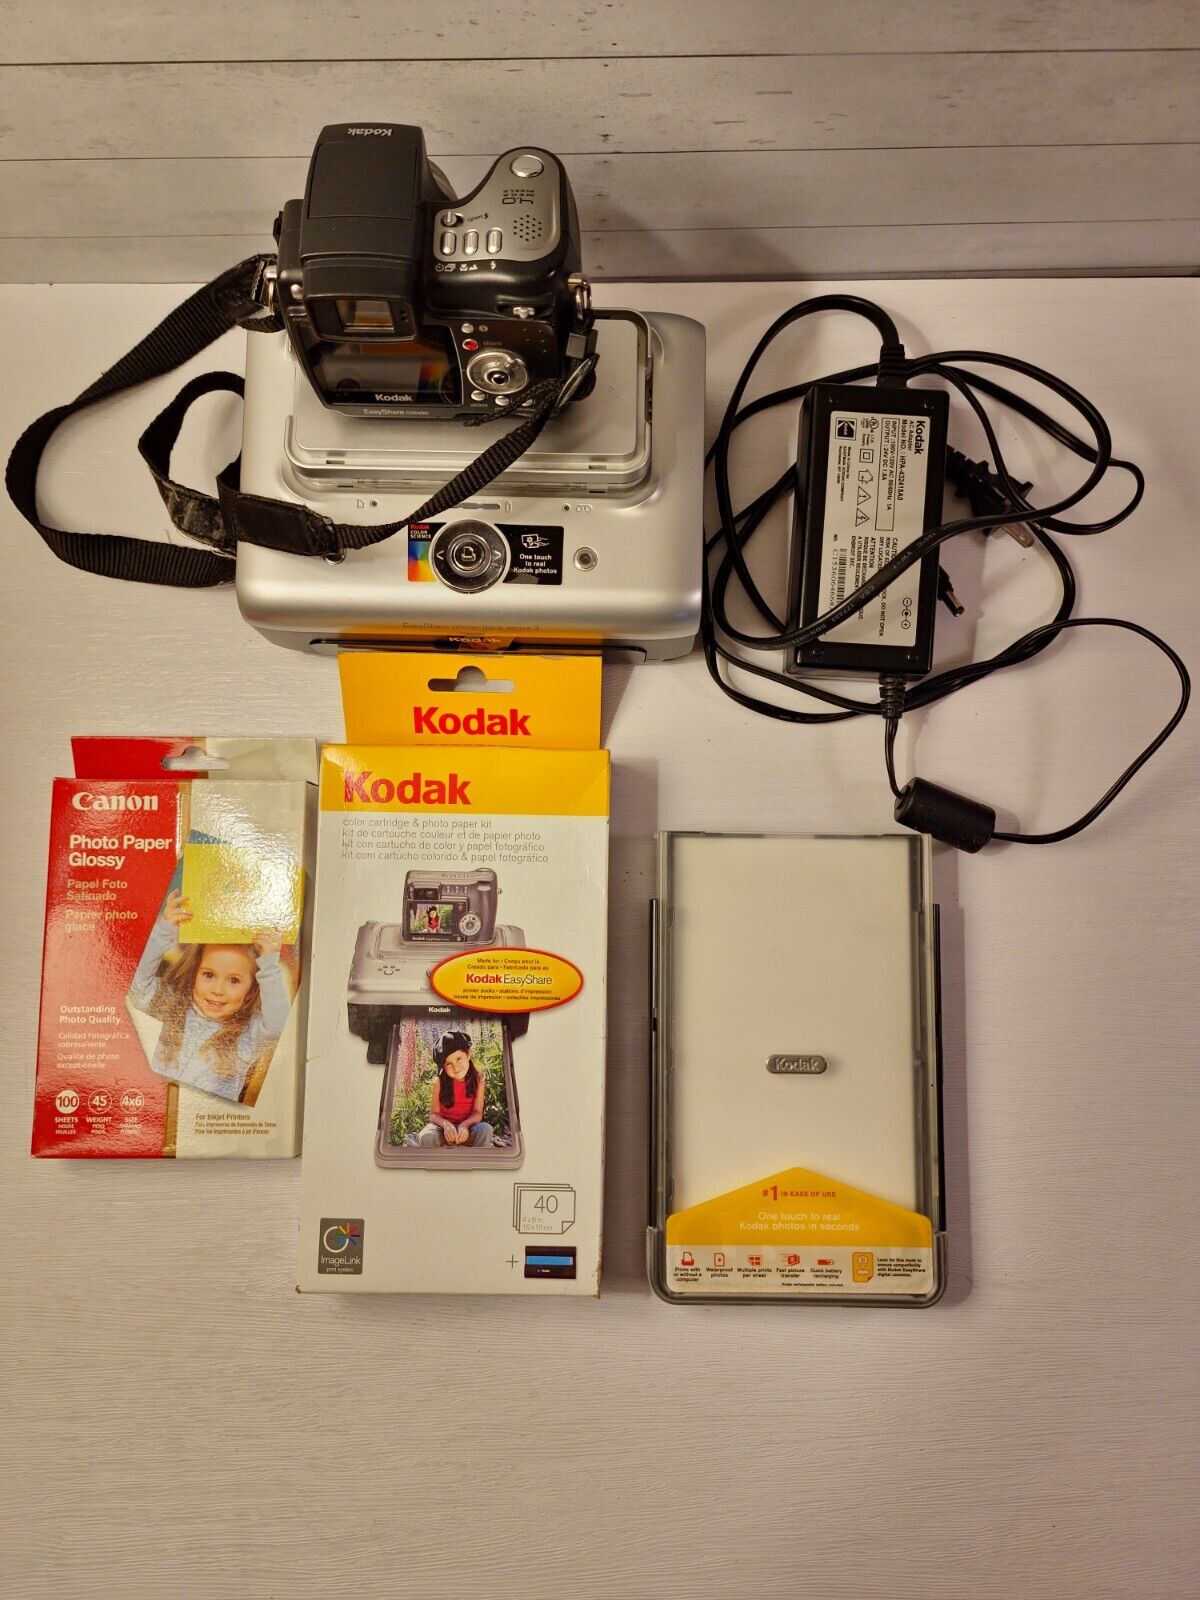 Kodak EasyShare Camera Dock Series 3 Printer and Kodak CCD DX6490 Camera.  